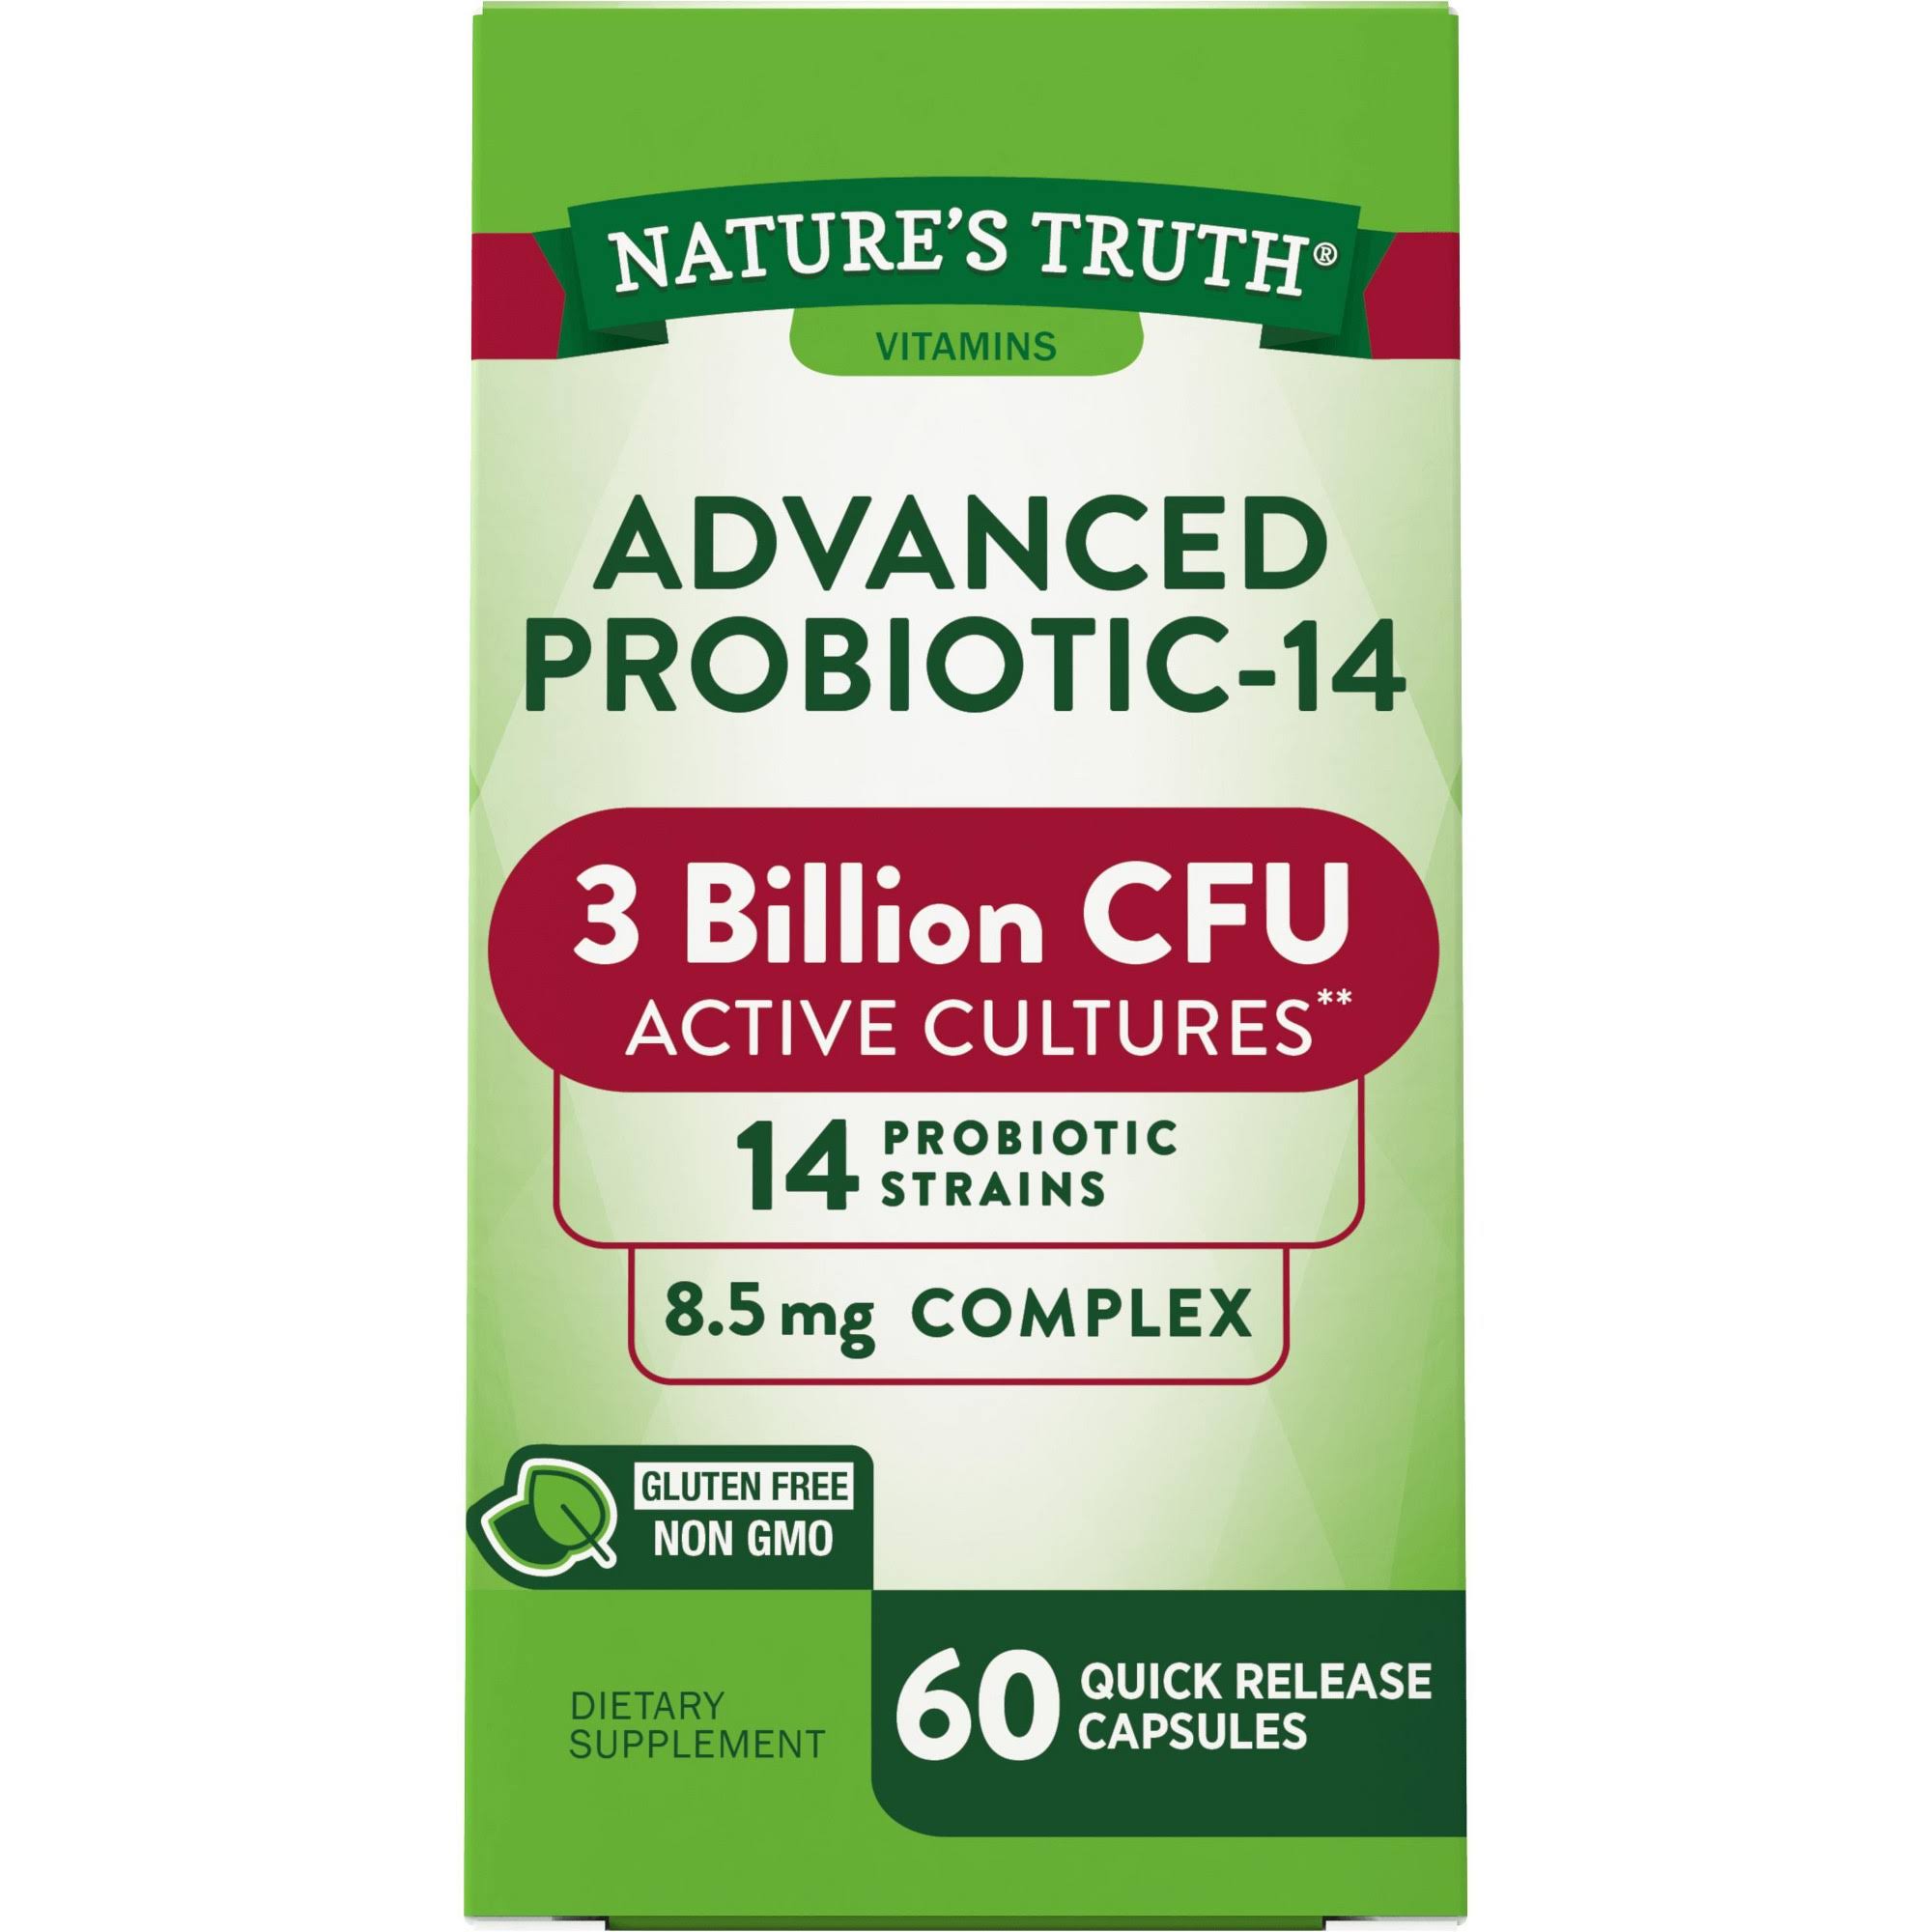 Nature's Truth Probiotic 3 Billion Cultures - 60ct